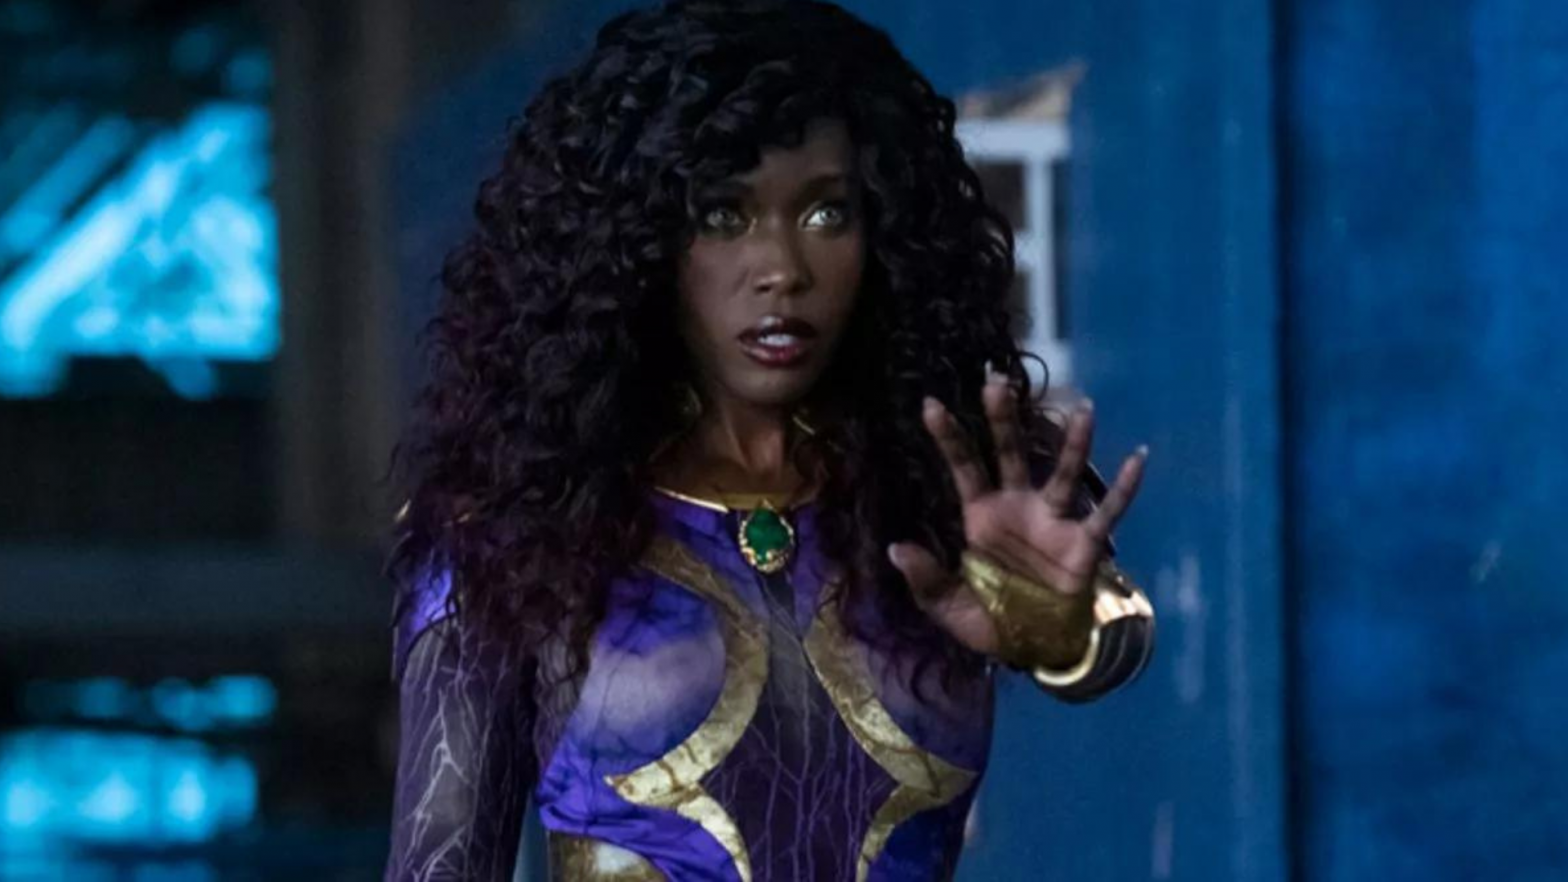 Anna Diop revela que gostaria de interpretar a Tempestade de X-Men